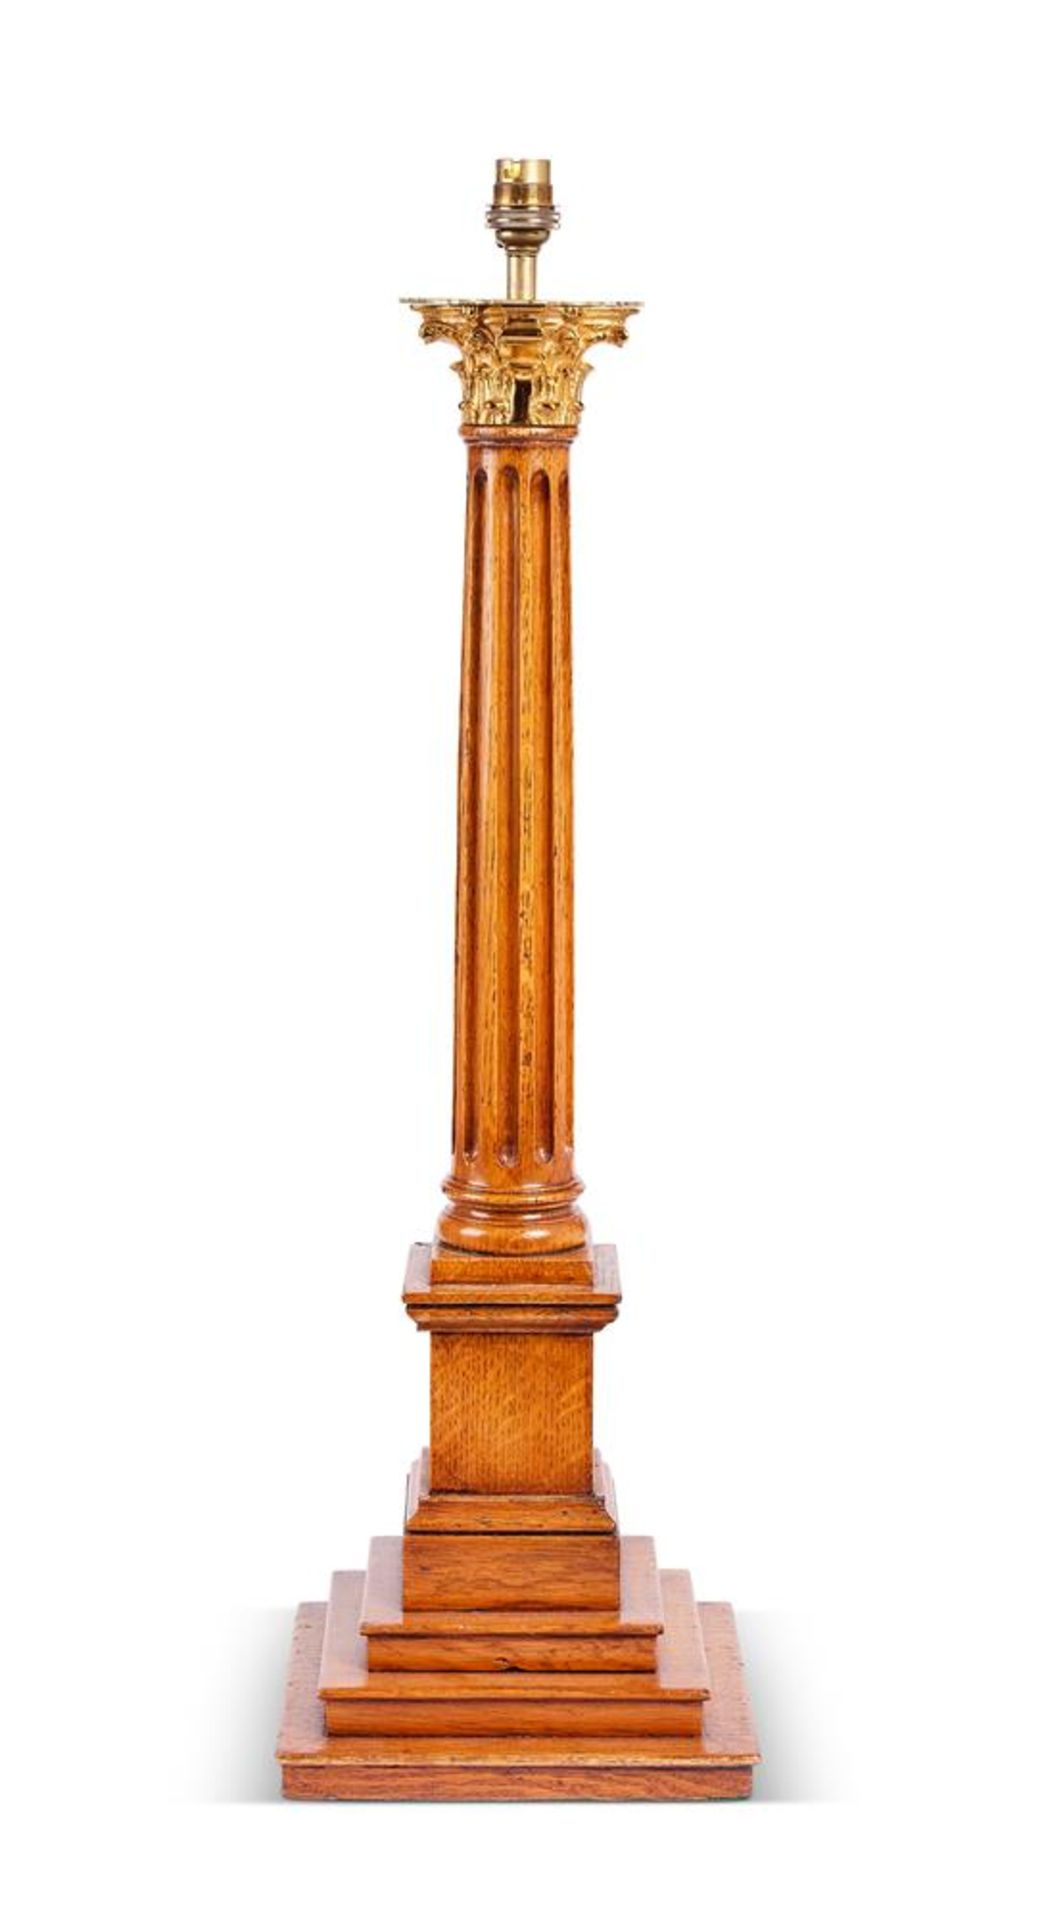 AN OAK TABLE LAMP IN THE FORM OF A CORINTHIAN COLUMN, MODERN